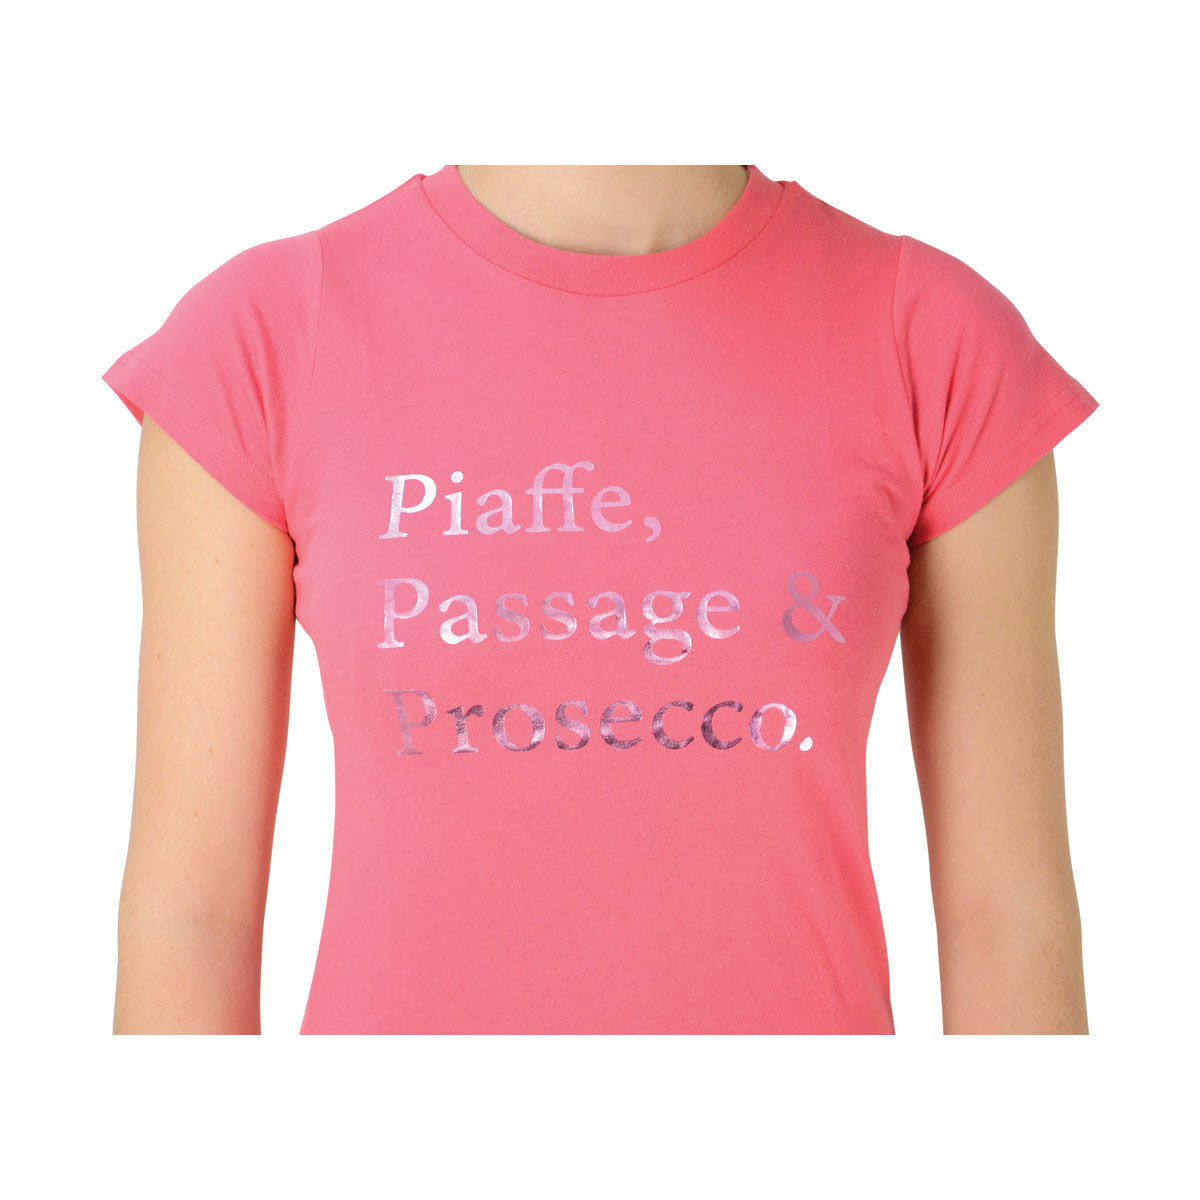 Pasaje de Piaffe Hyfashion & Prosecco Ladies Camiseta